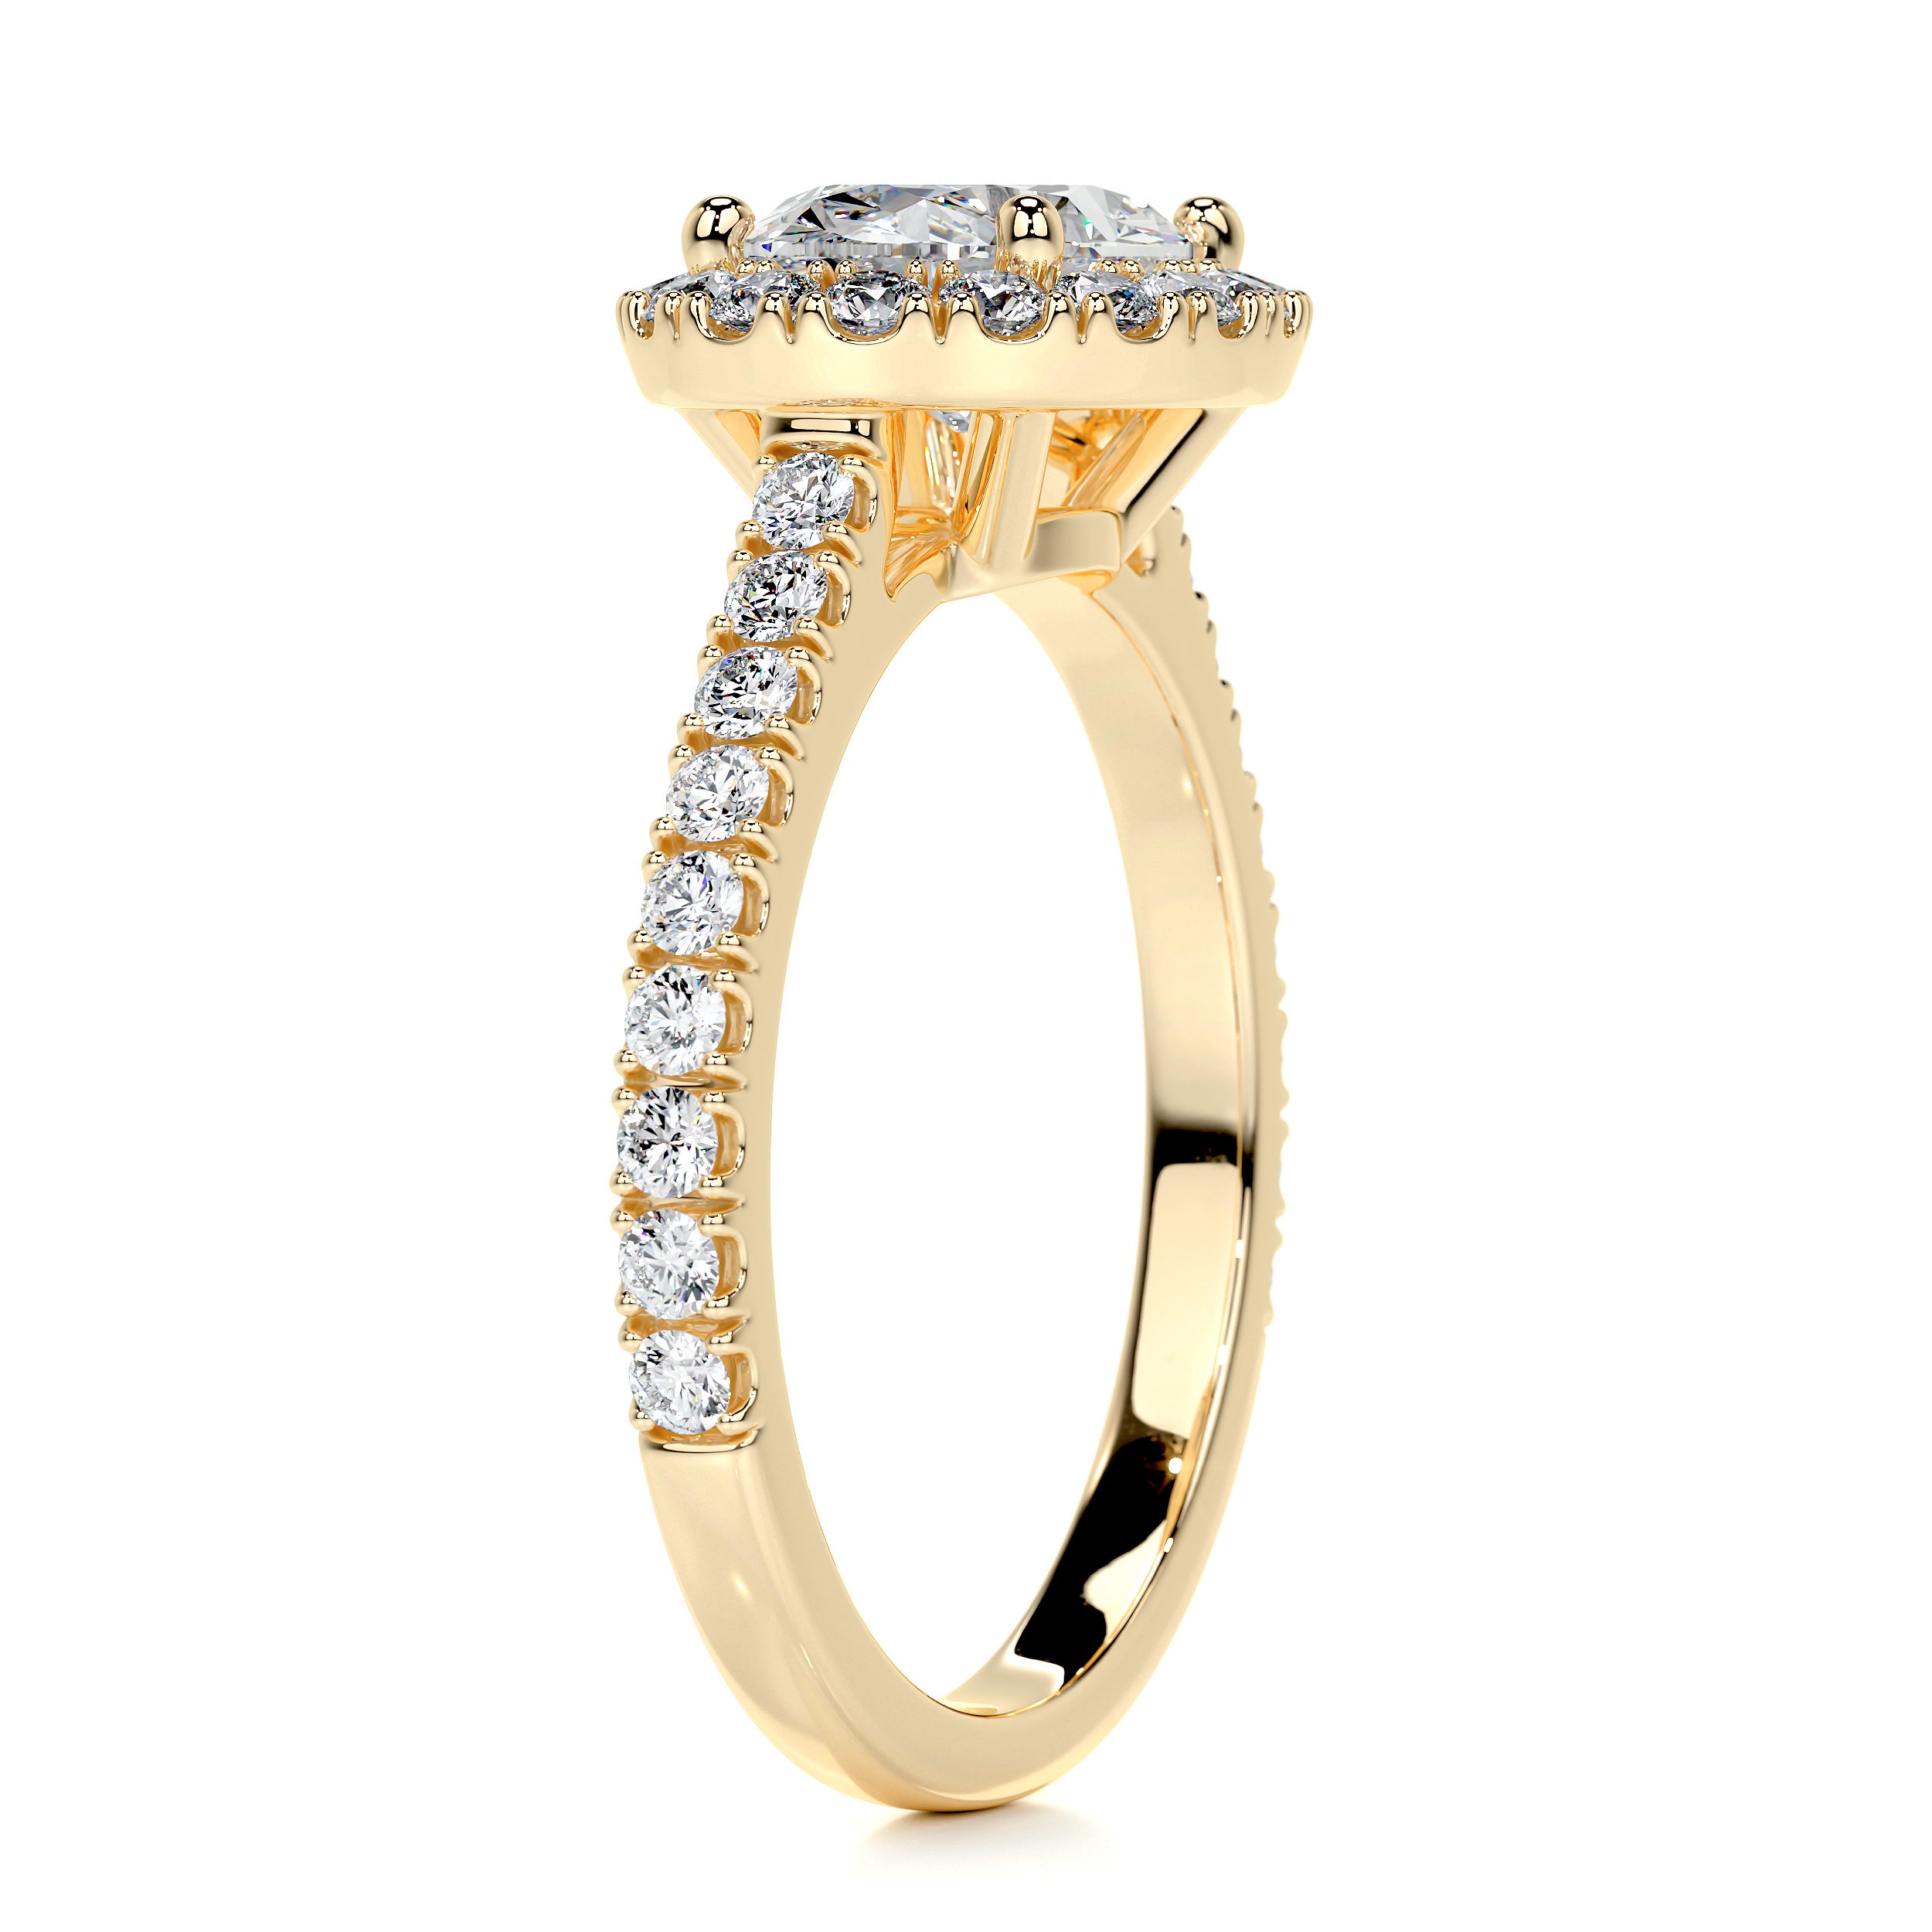 Alessandra Diamond Engagement Ring   (1.30 Carat) -18K Yellow Gold